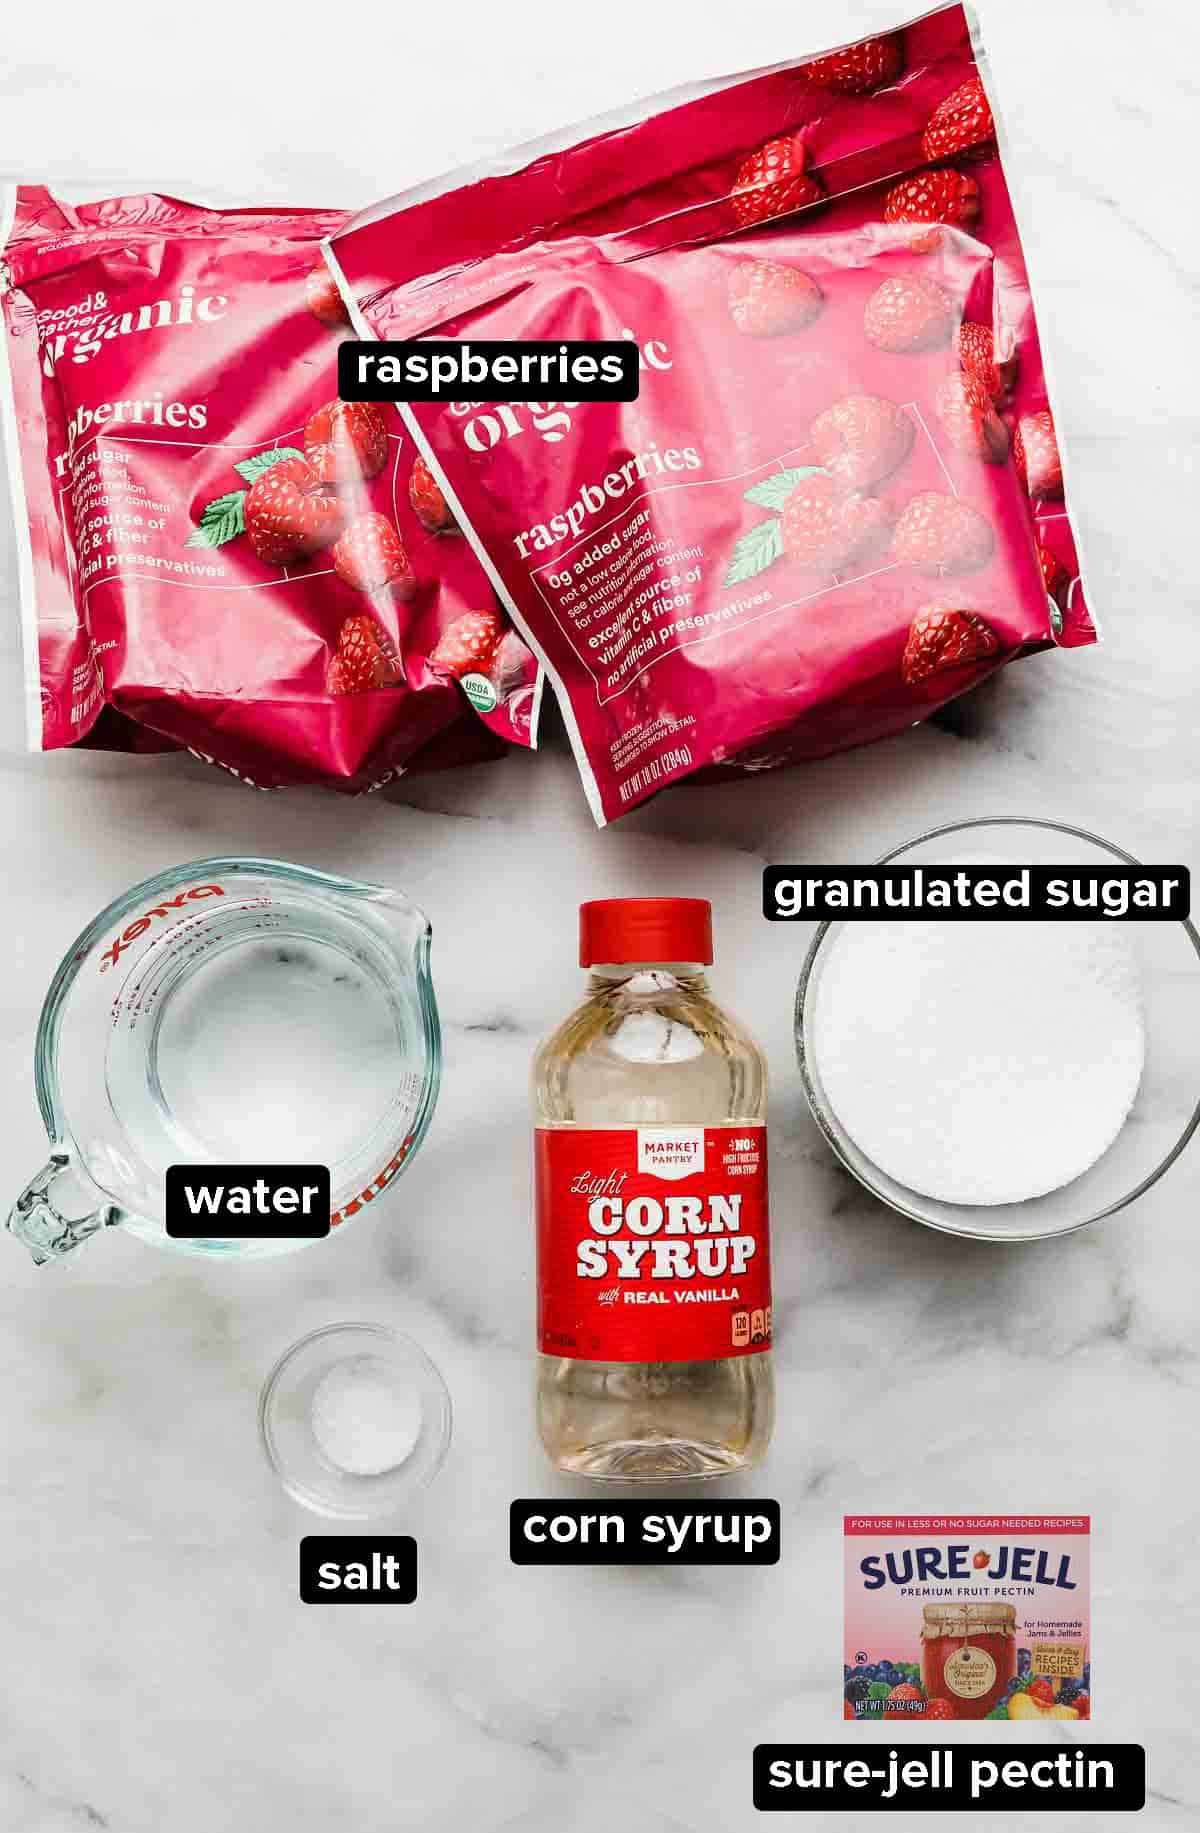 Raspberry Sorbet ingredients on a white background: pectin, corn syrup, sugar, salt, water, and frozen raspberries. 